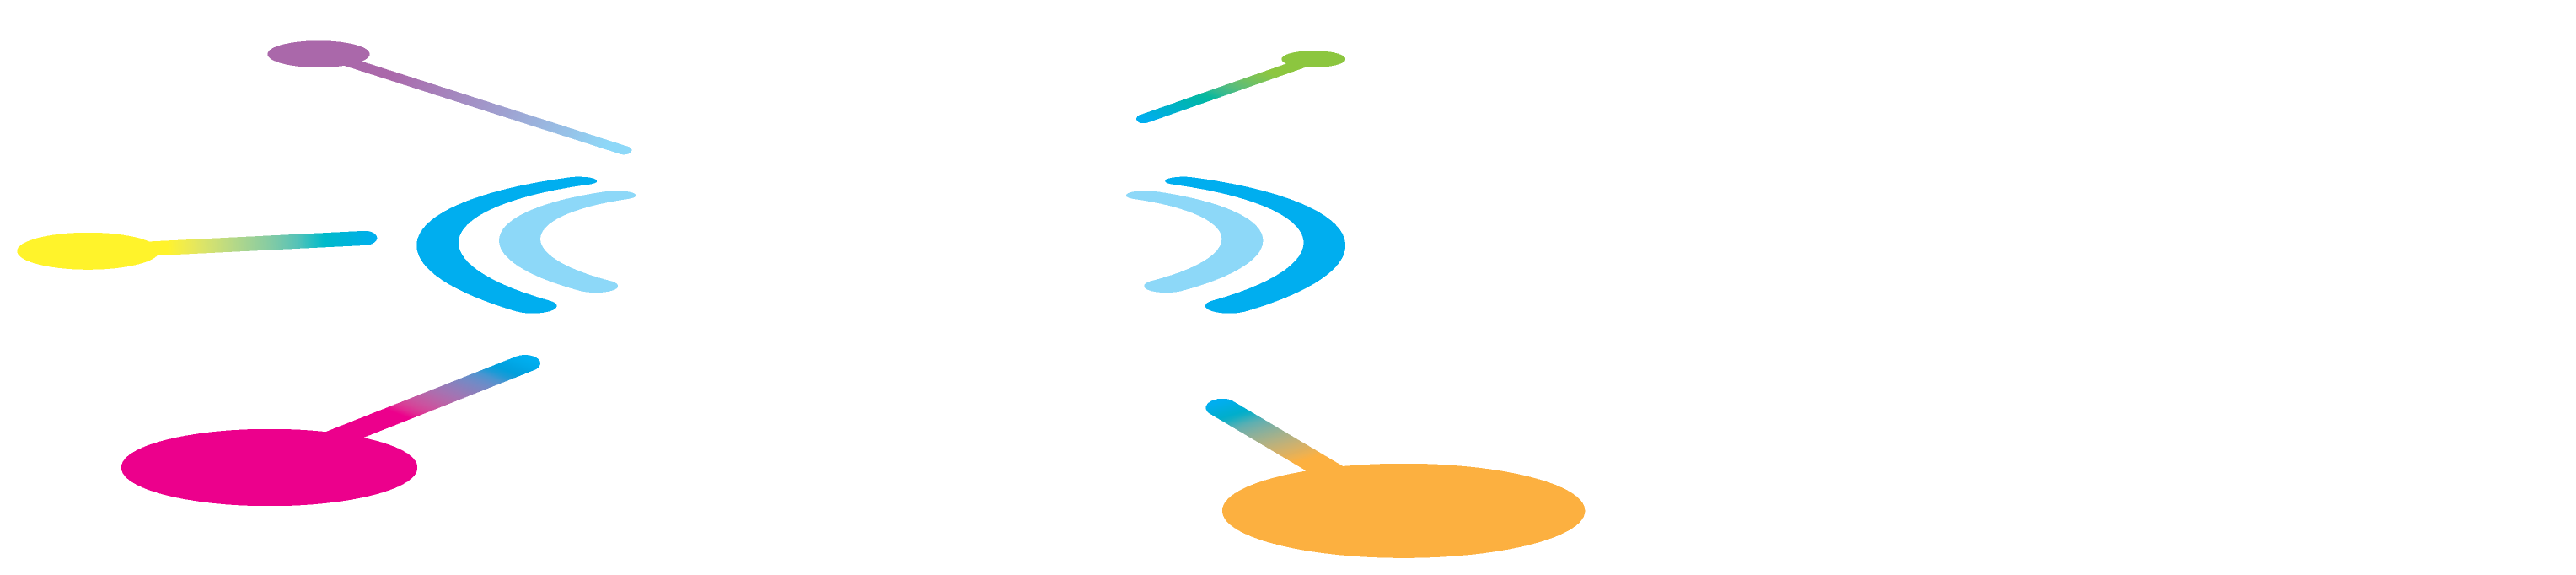 Smart Mobility Technology (C-V2X) Alliance (SMTA)